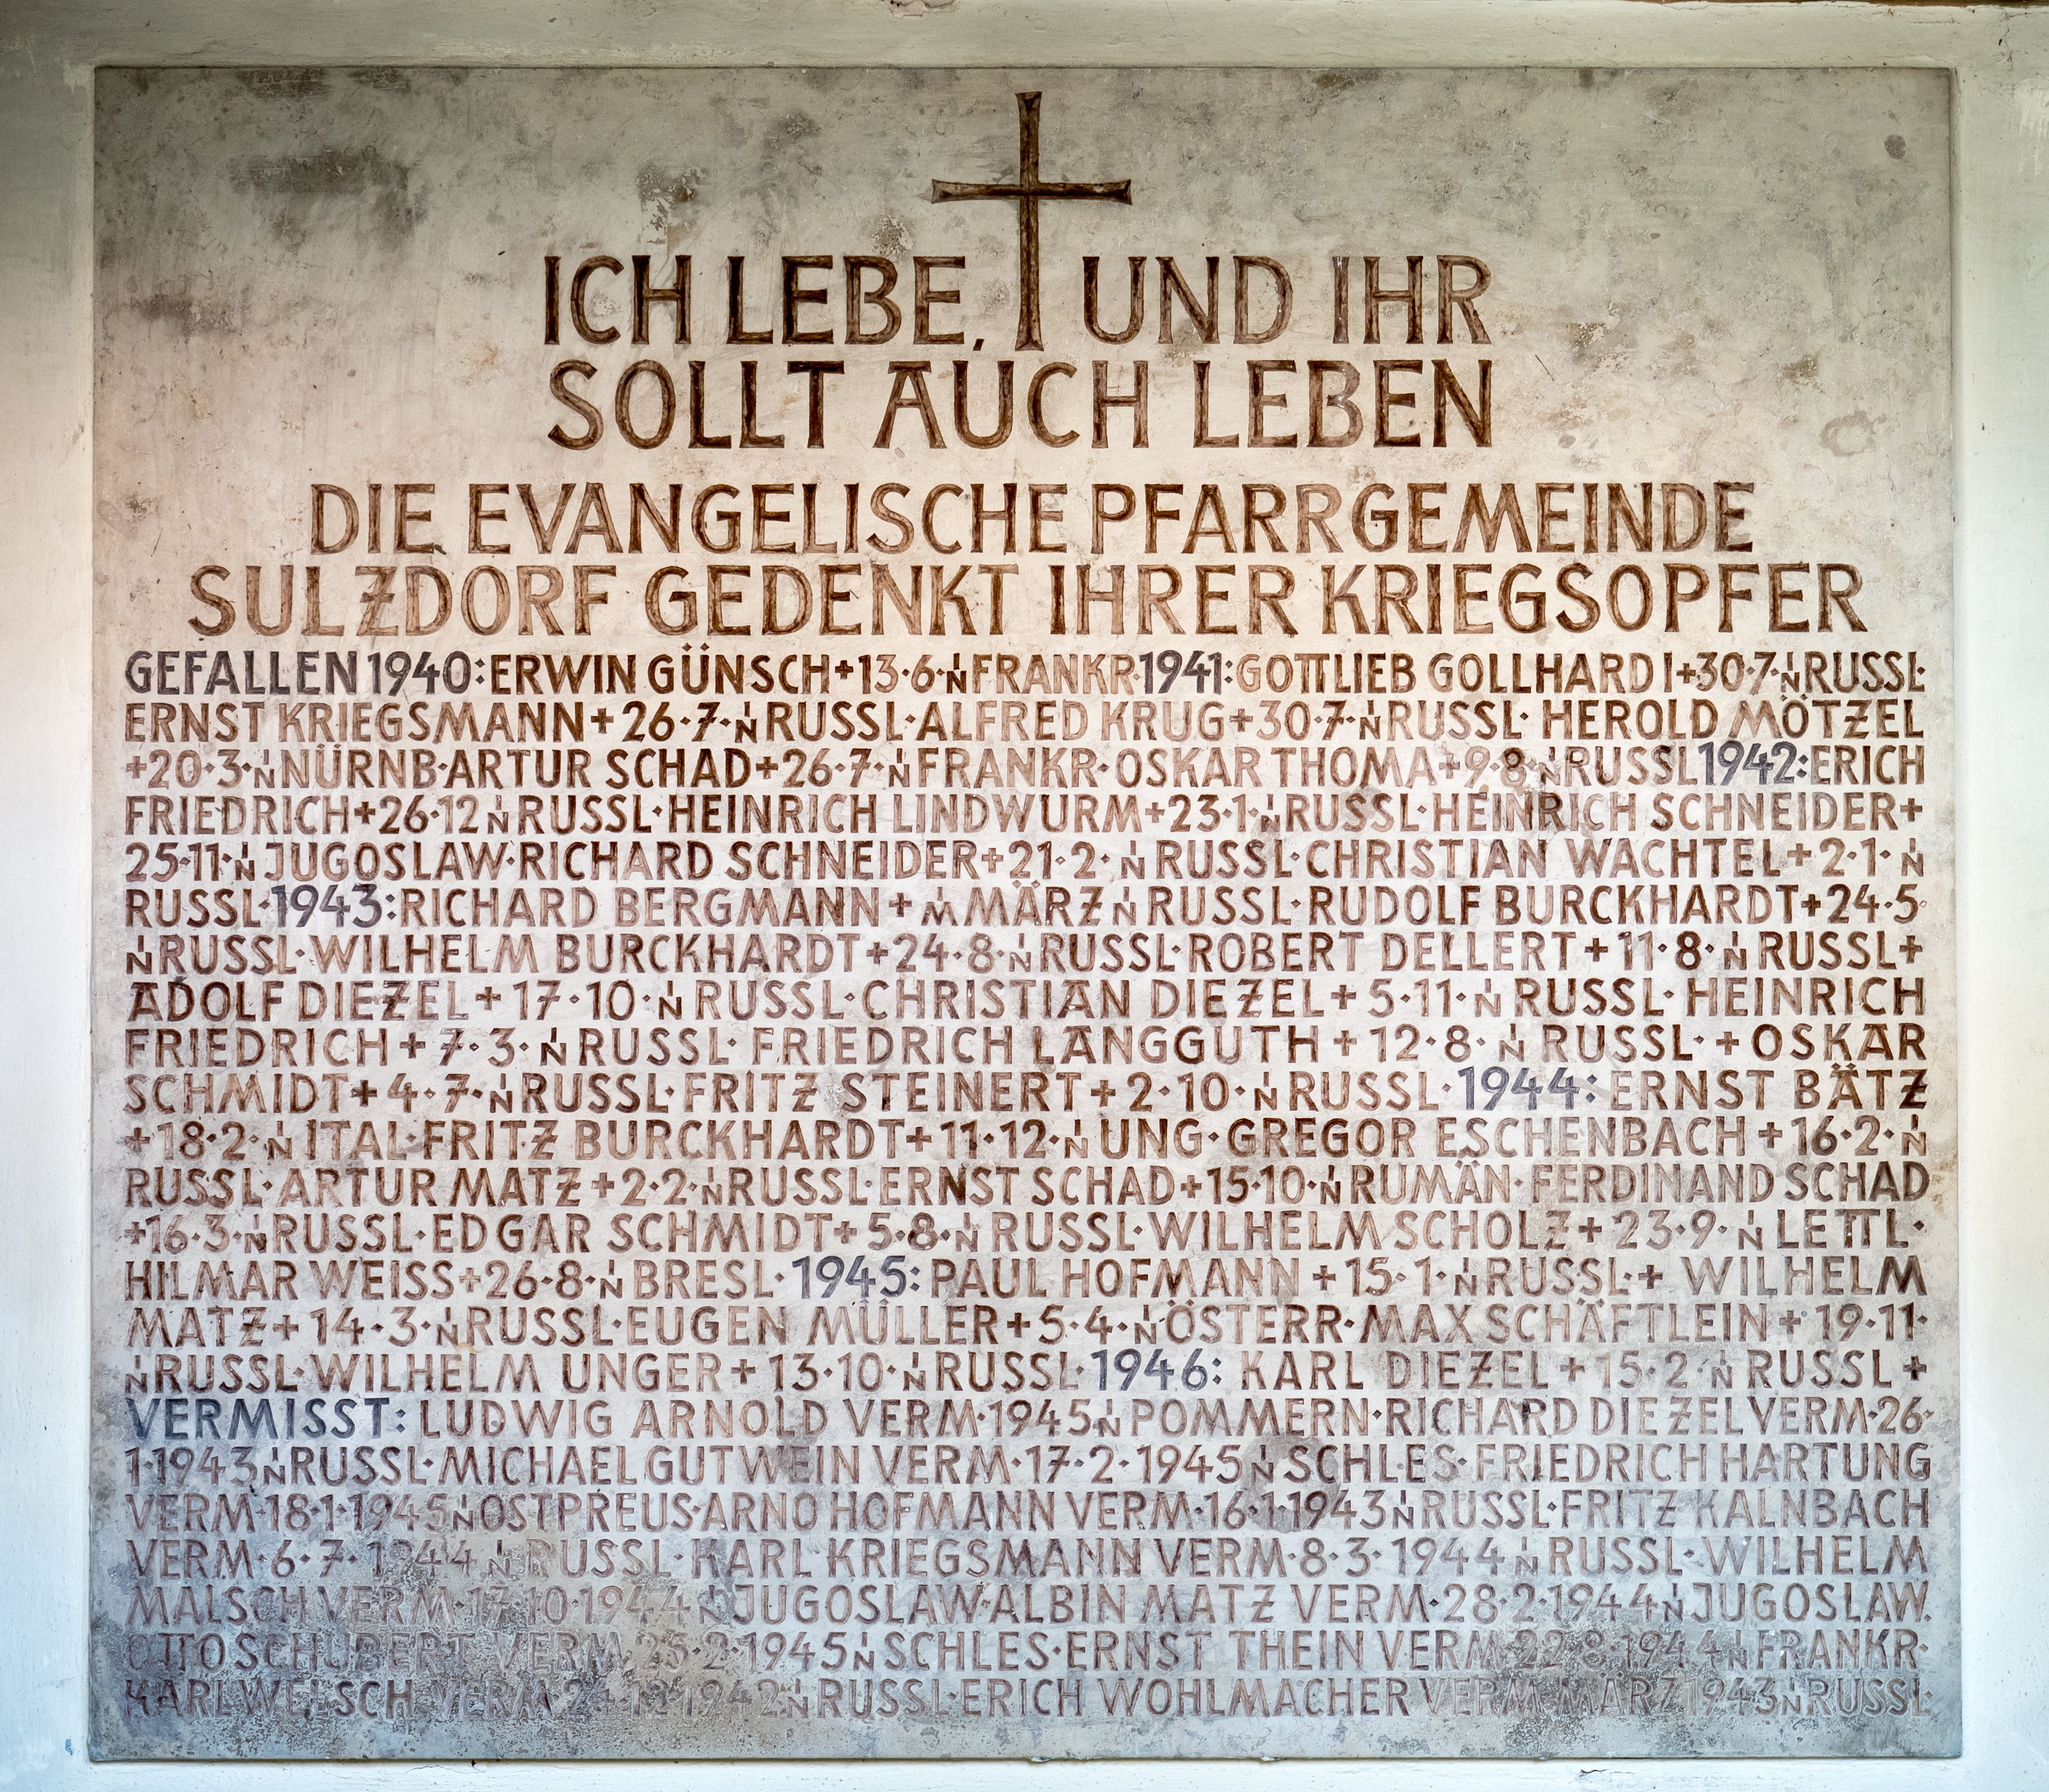 Sulzdorf adL memorial plaque 8287445